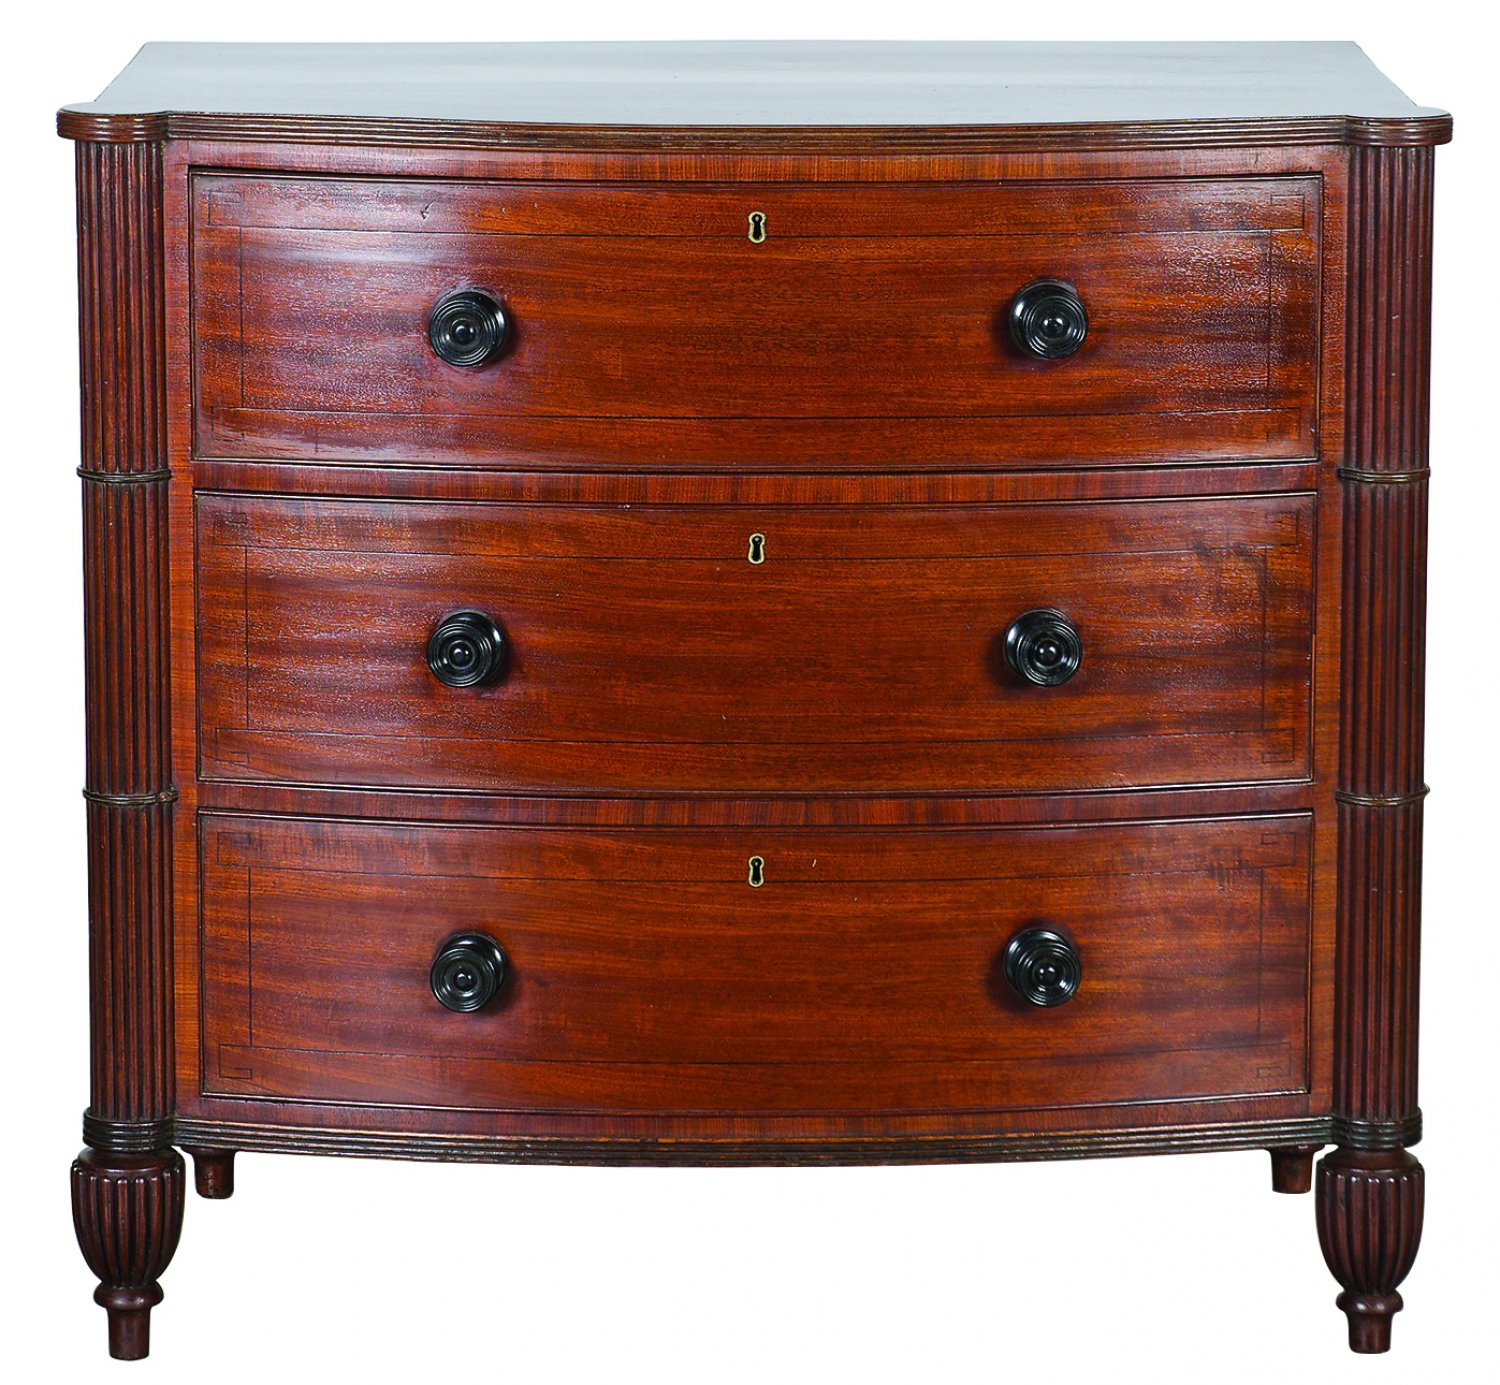 Regency period mahogany three drawer commode, with ebony stringing and knobs 